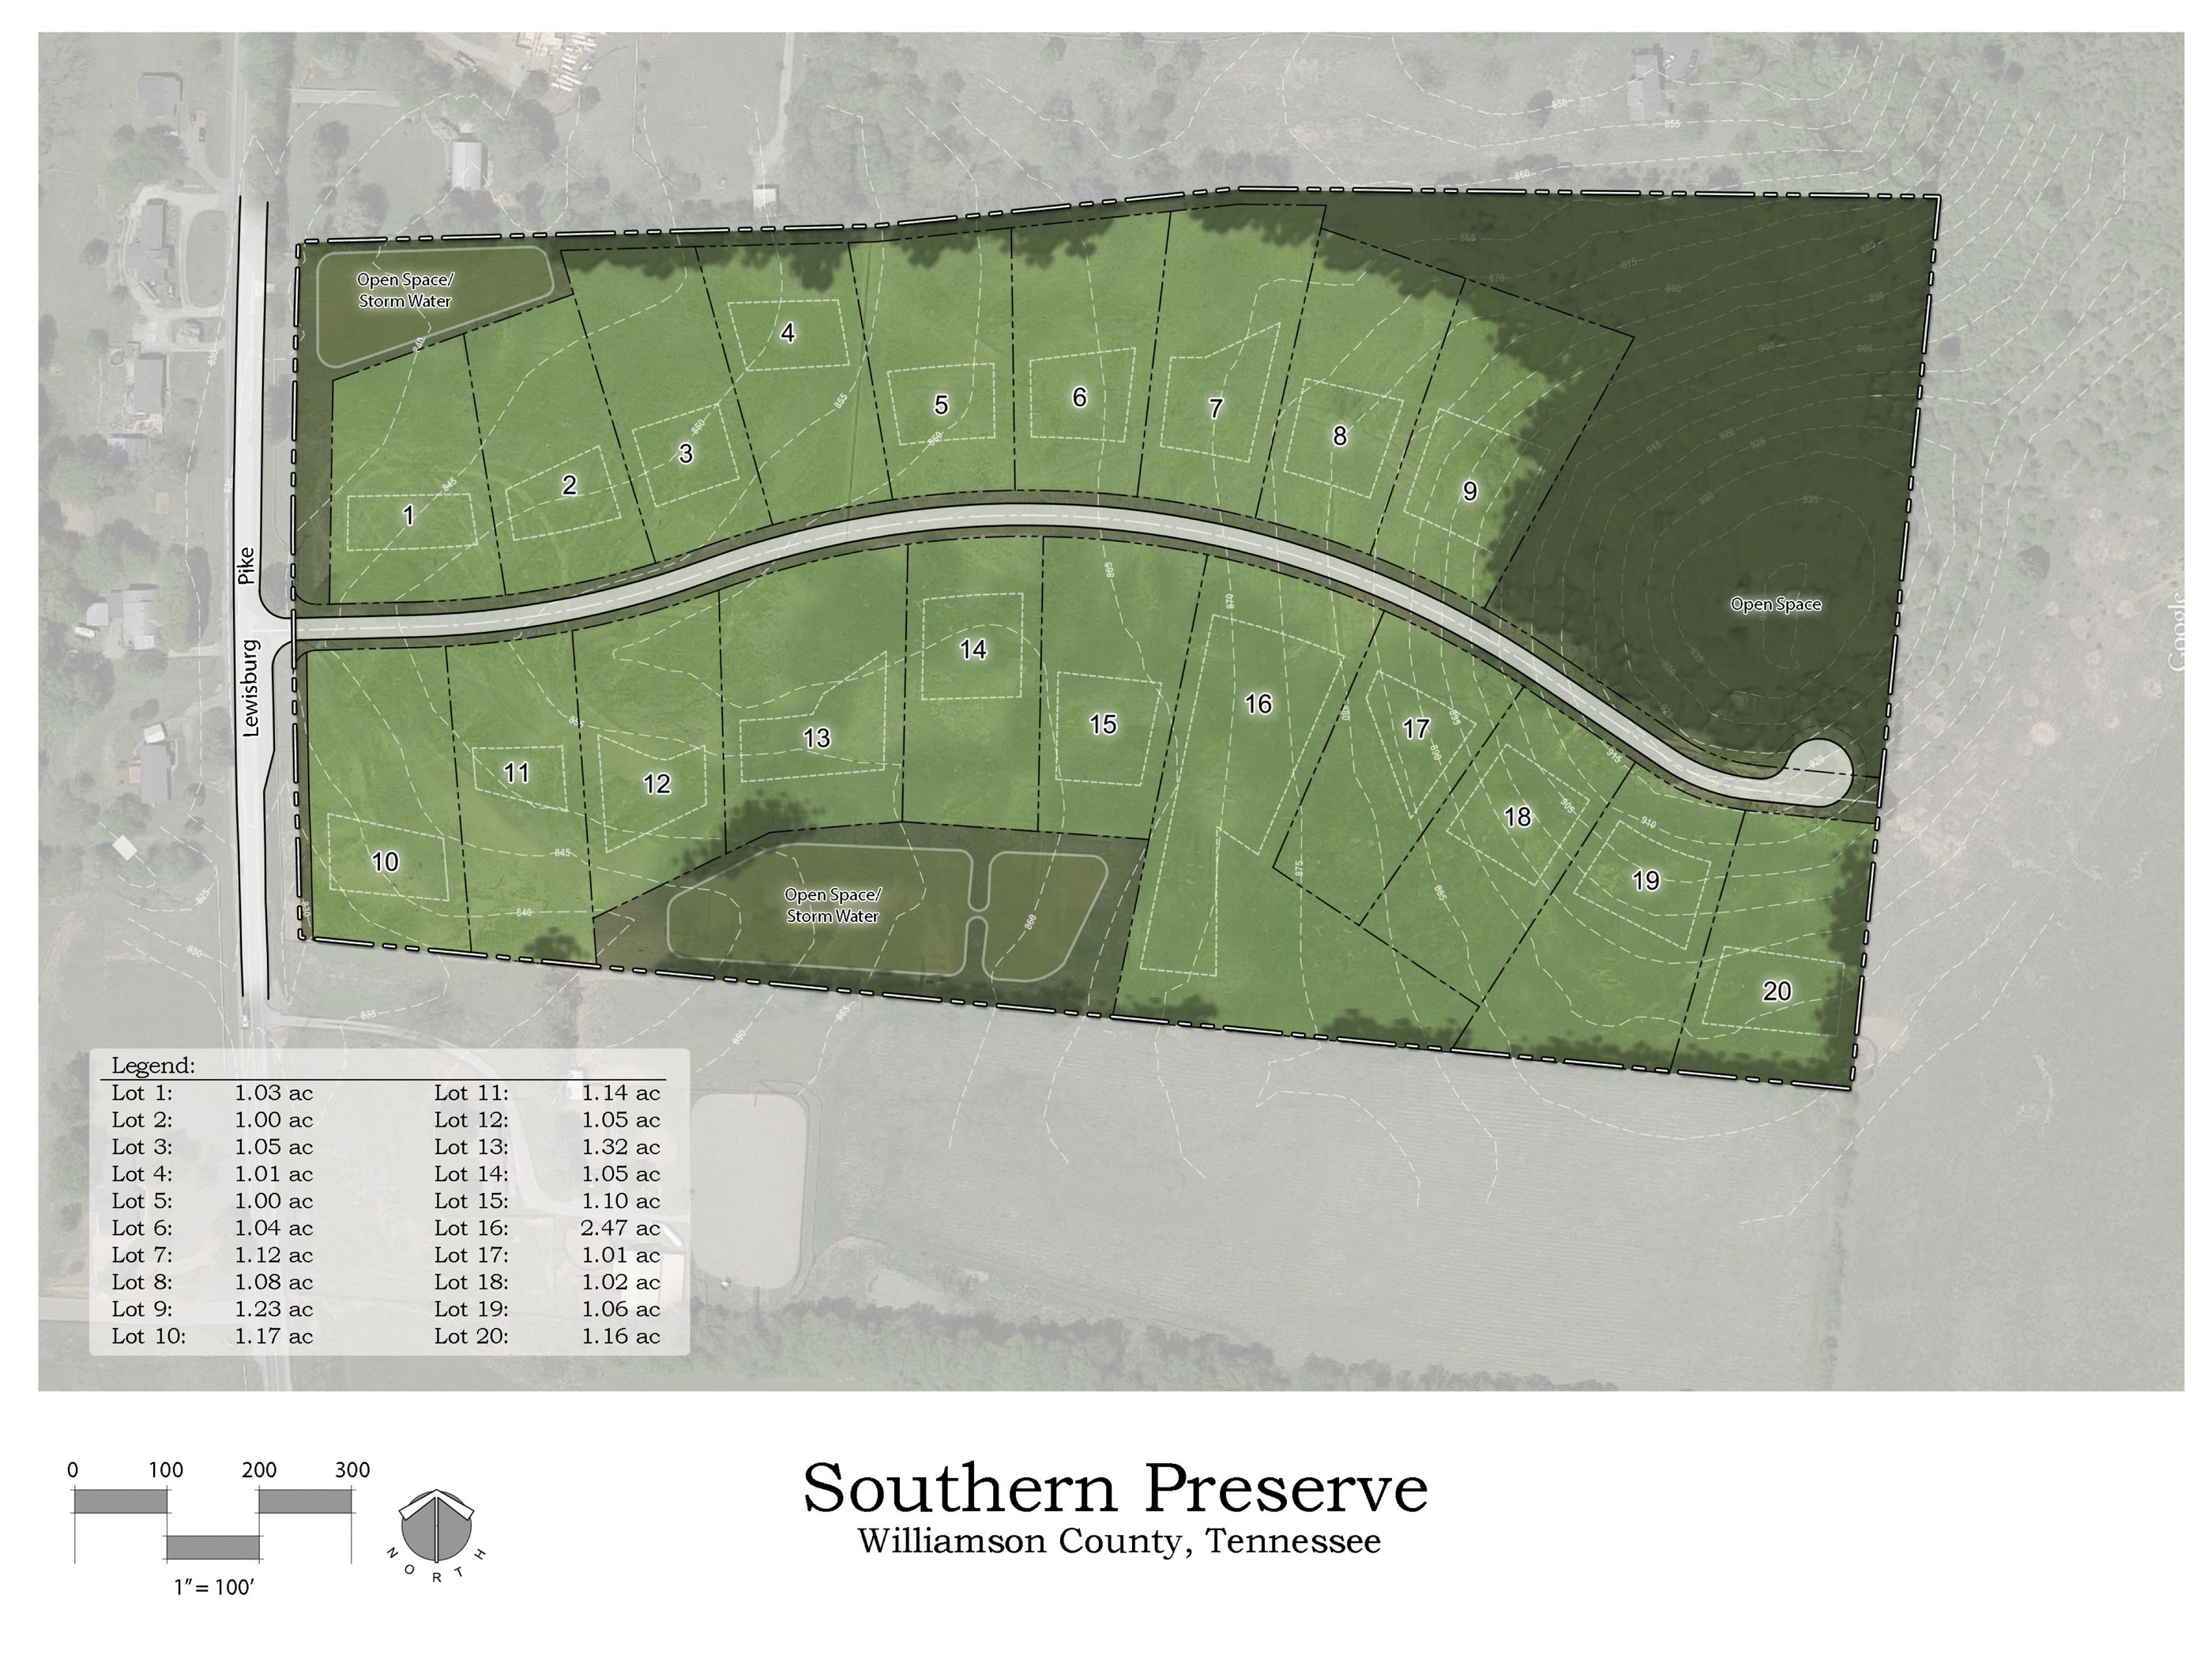 Site rendering of Southern Preserve by Jason Goddard